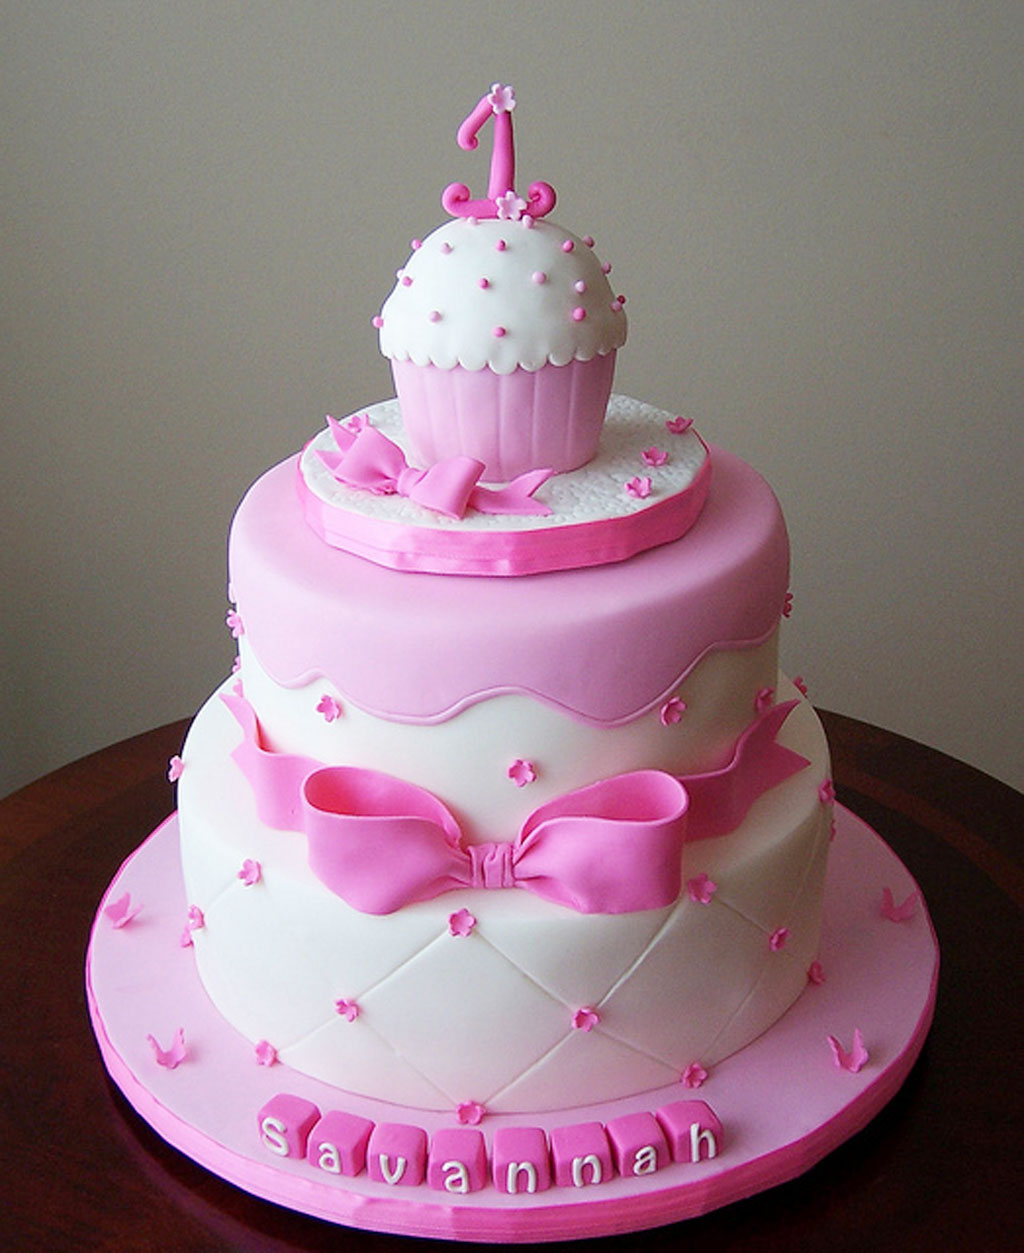 Girls 1st Birthday Cakes Birthday Cake Cake Ideas by Prayface net